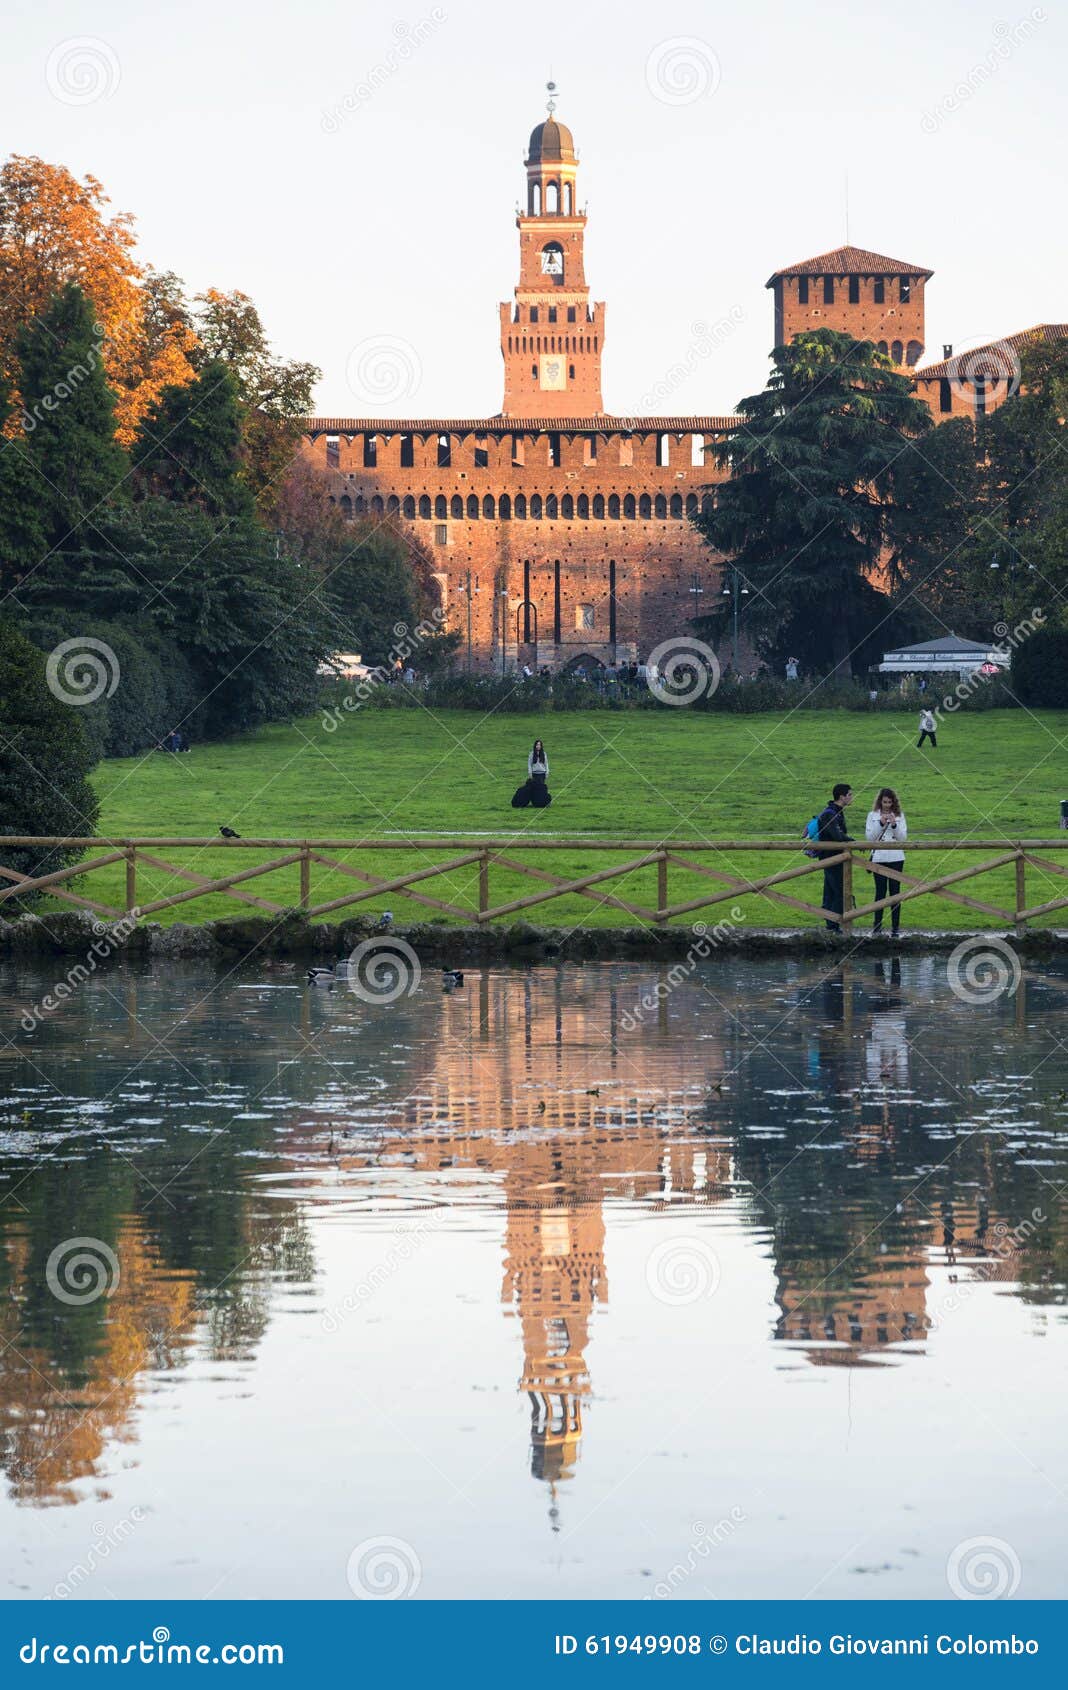 Milan (Italy) at fall editorial stock photo. Image of outdoor - 61949908